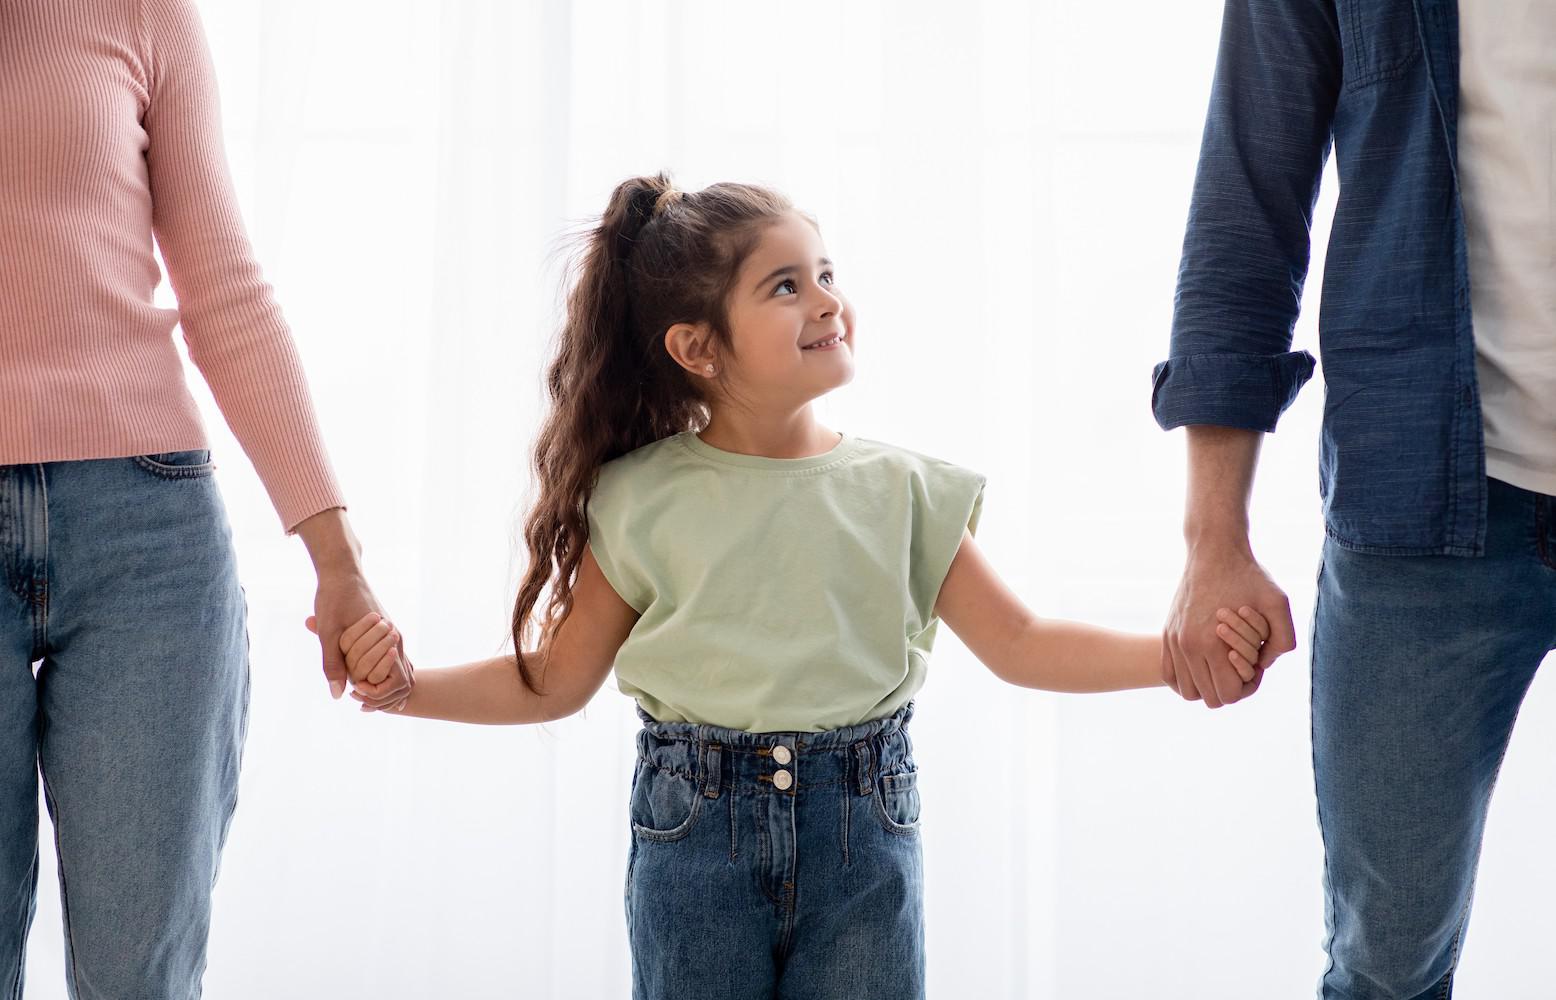 Steps to Take When Beginning an Adoption